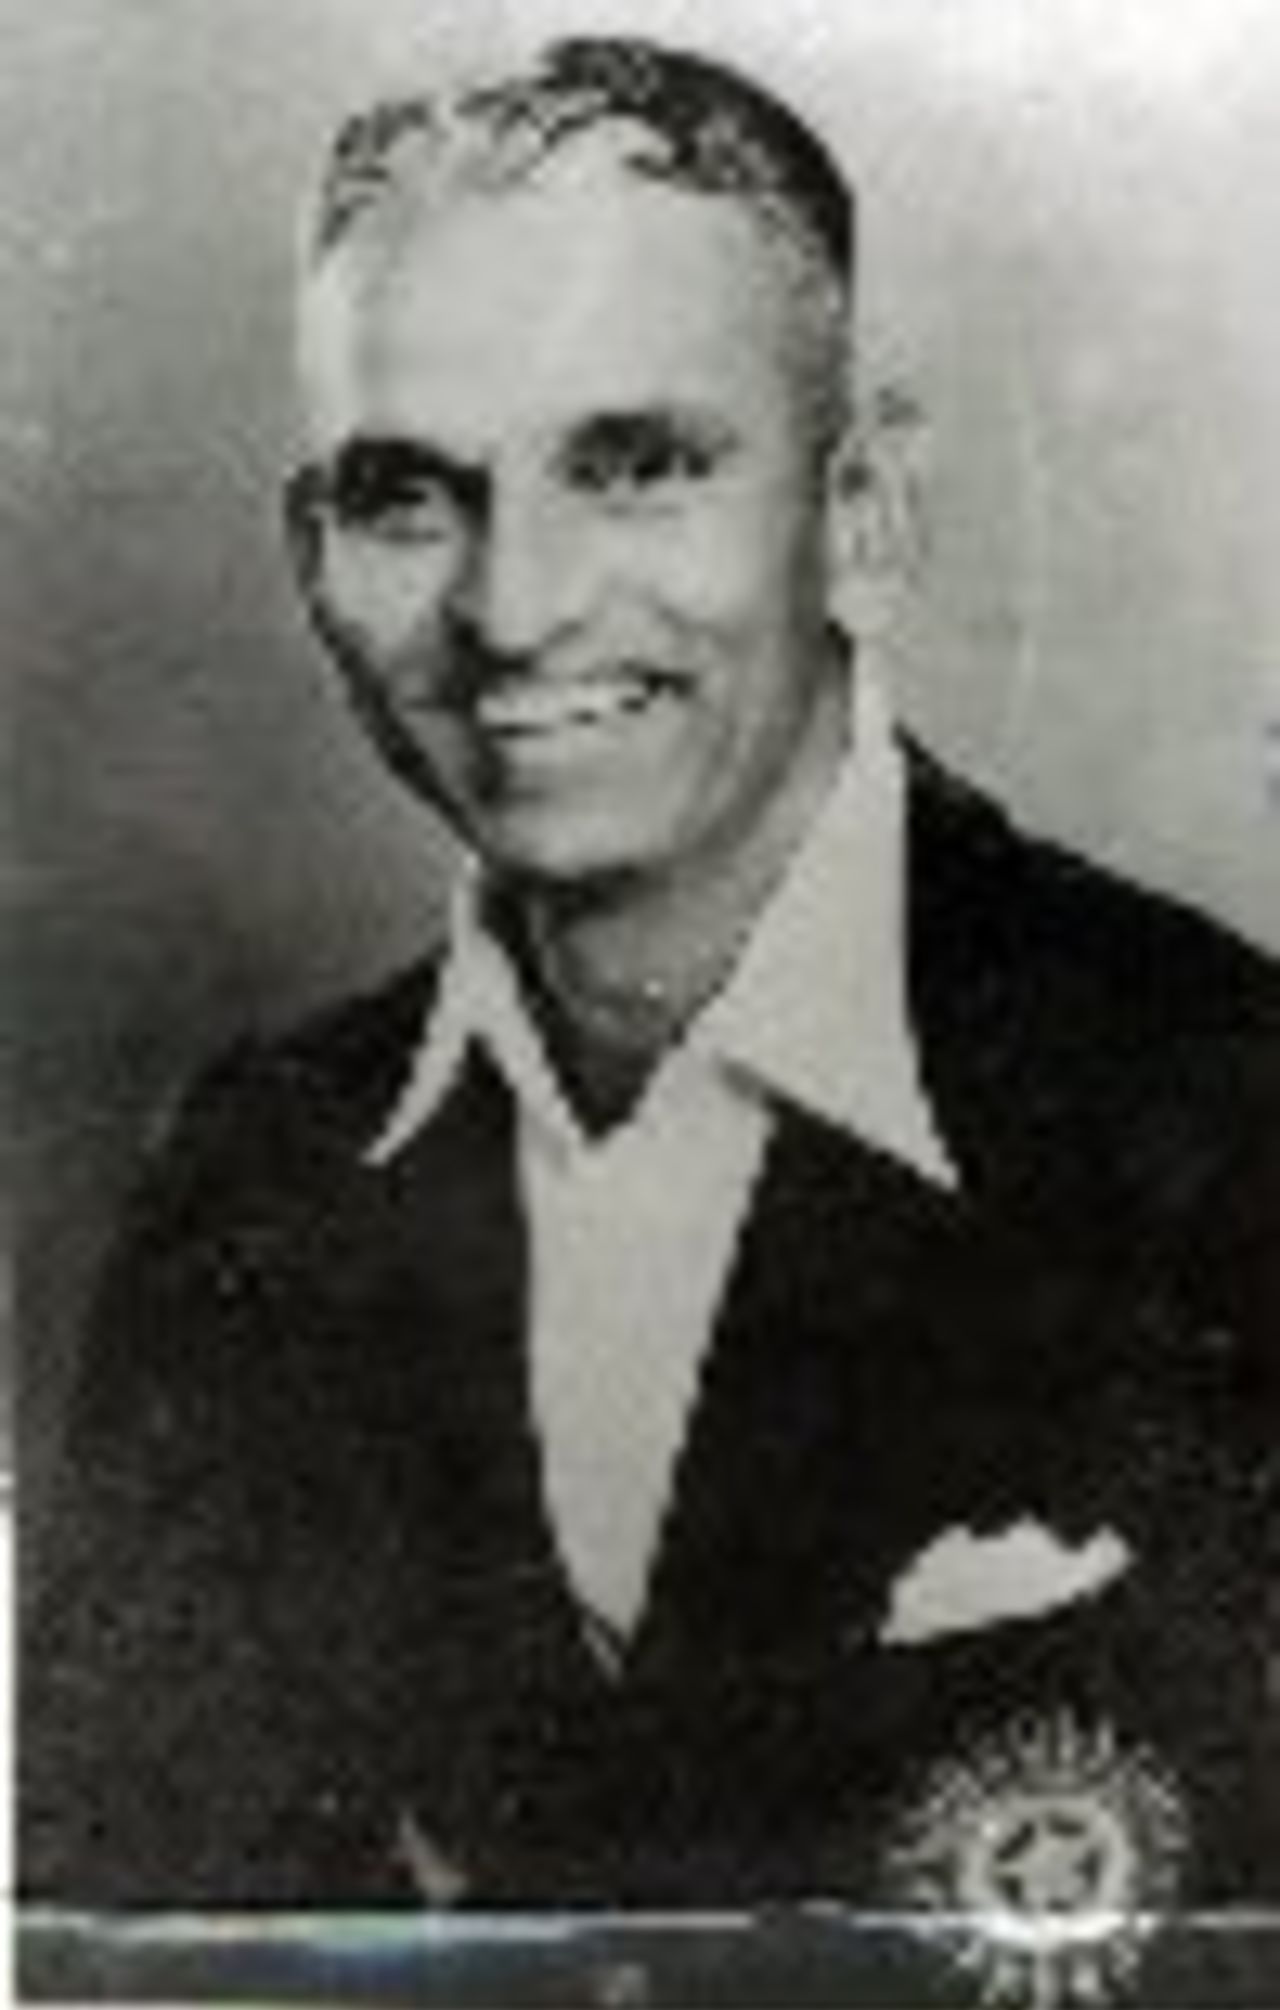 Morappakam Joysam Gopalan